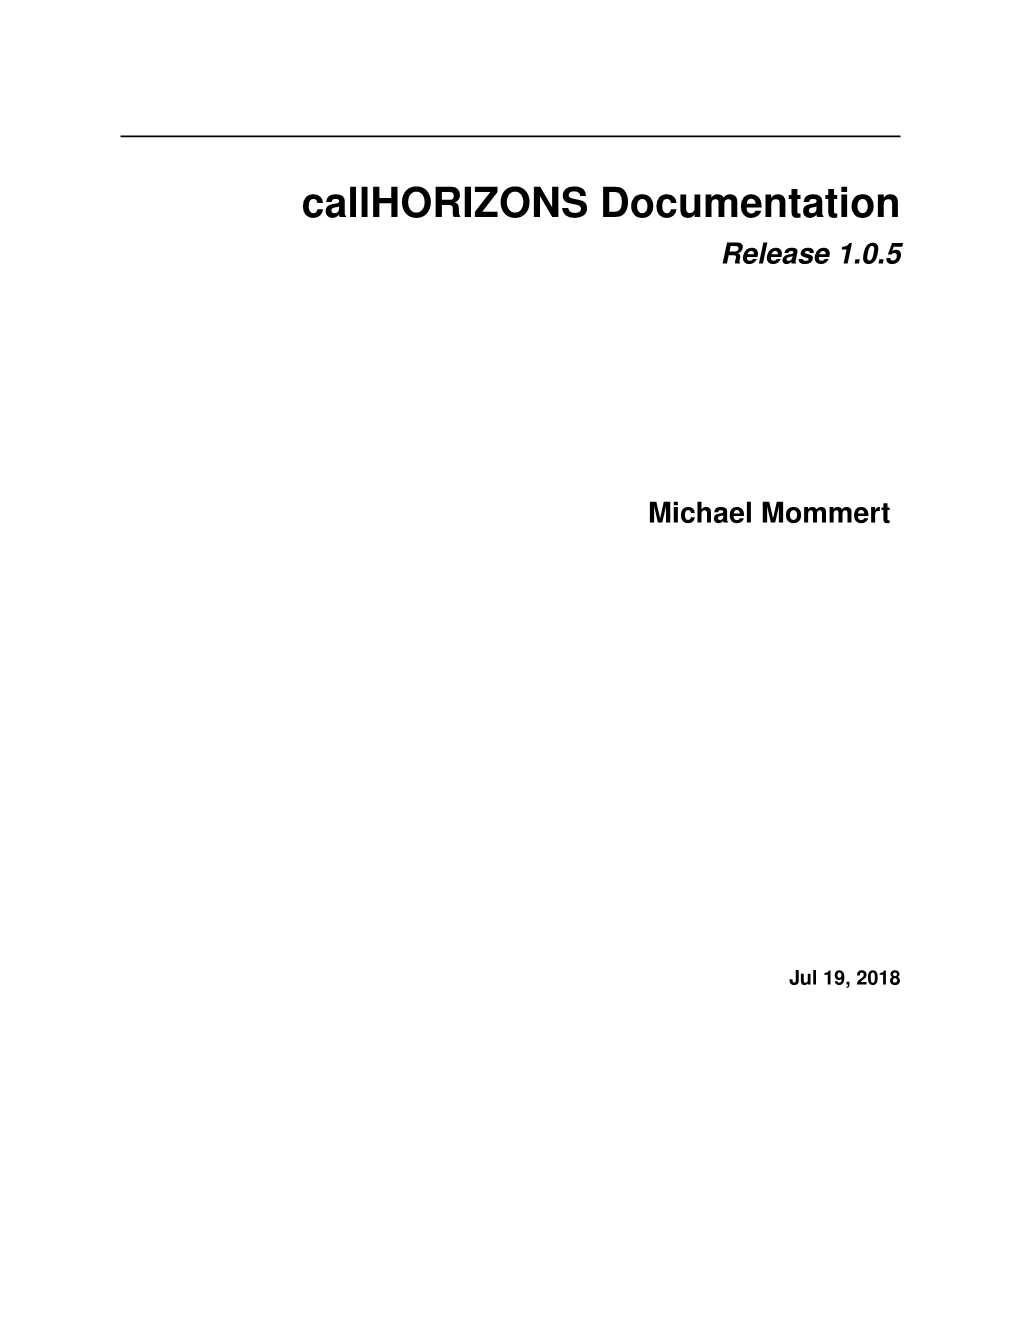 Callhorizons Documentation Release 1.0.5